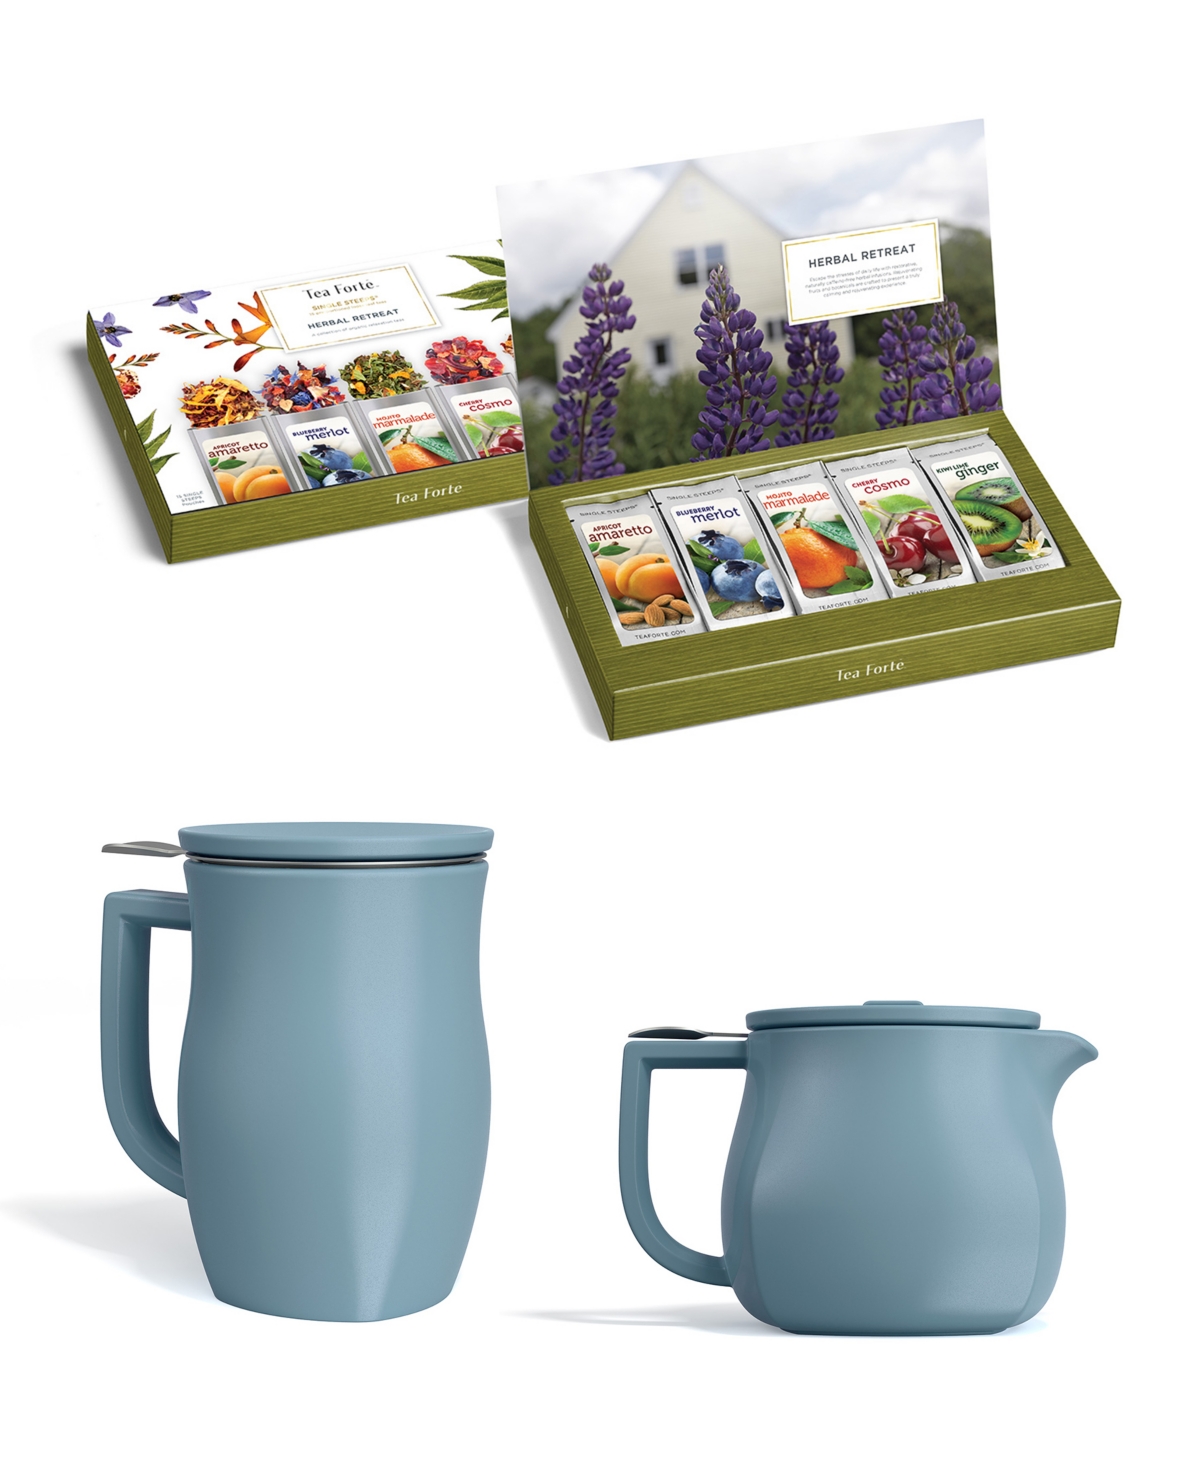 Tea Forte Fiore Stone Blue Teaware And Single Steeps Tea Bundle, 4 Piece In No Color